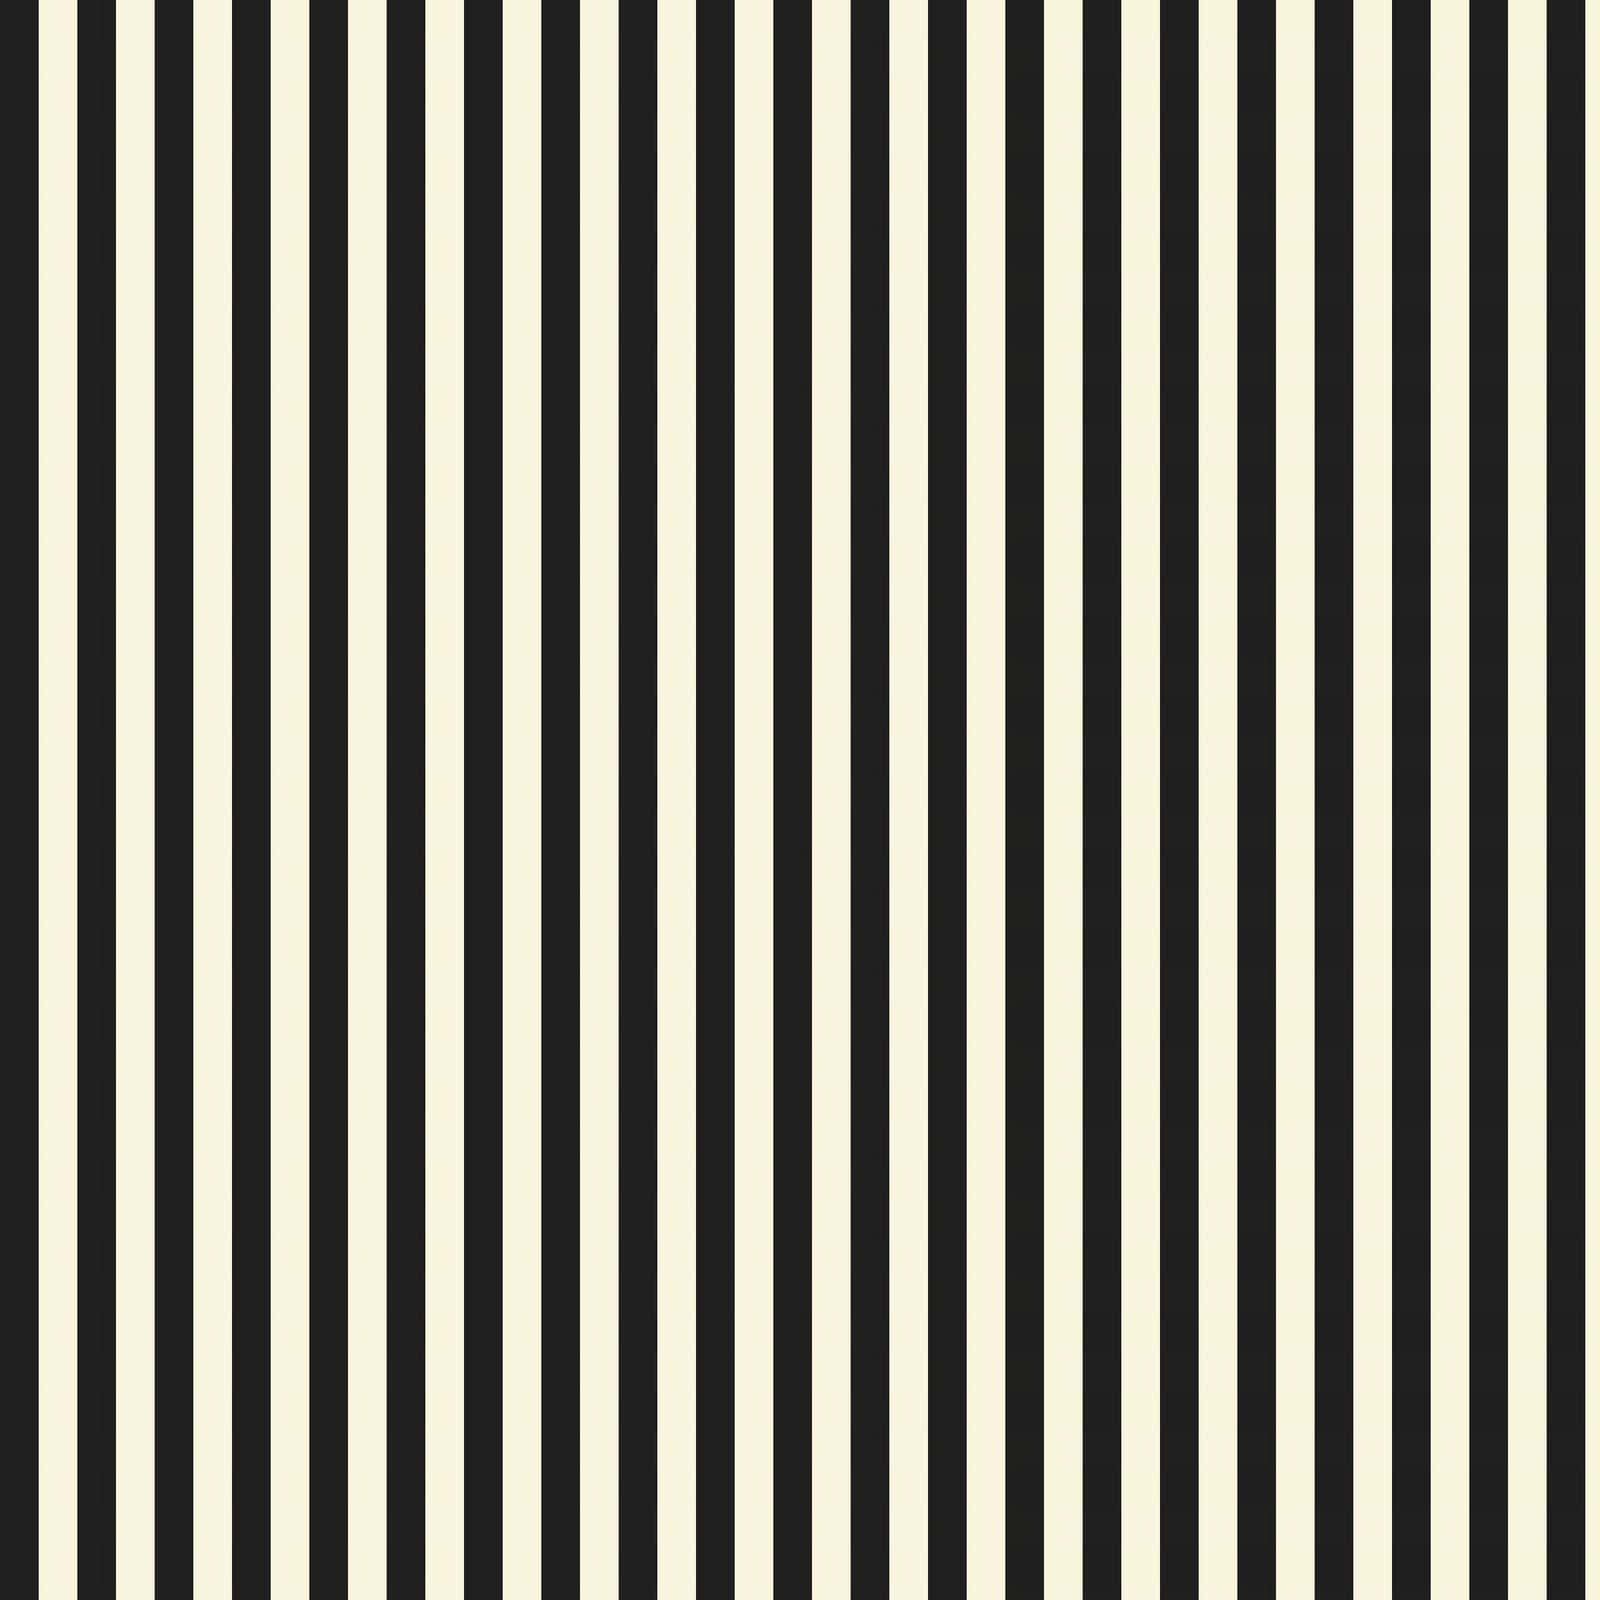 Striking Black and White Stripes Wallpaper